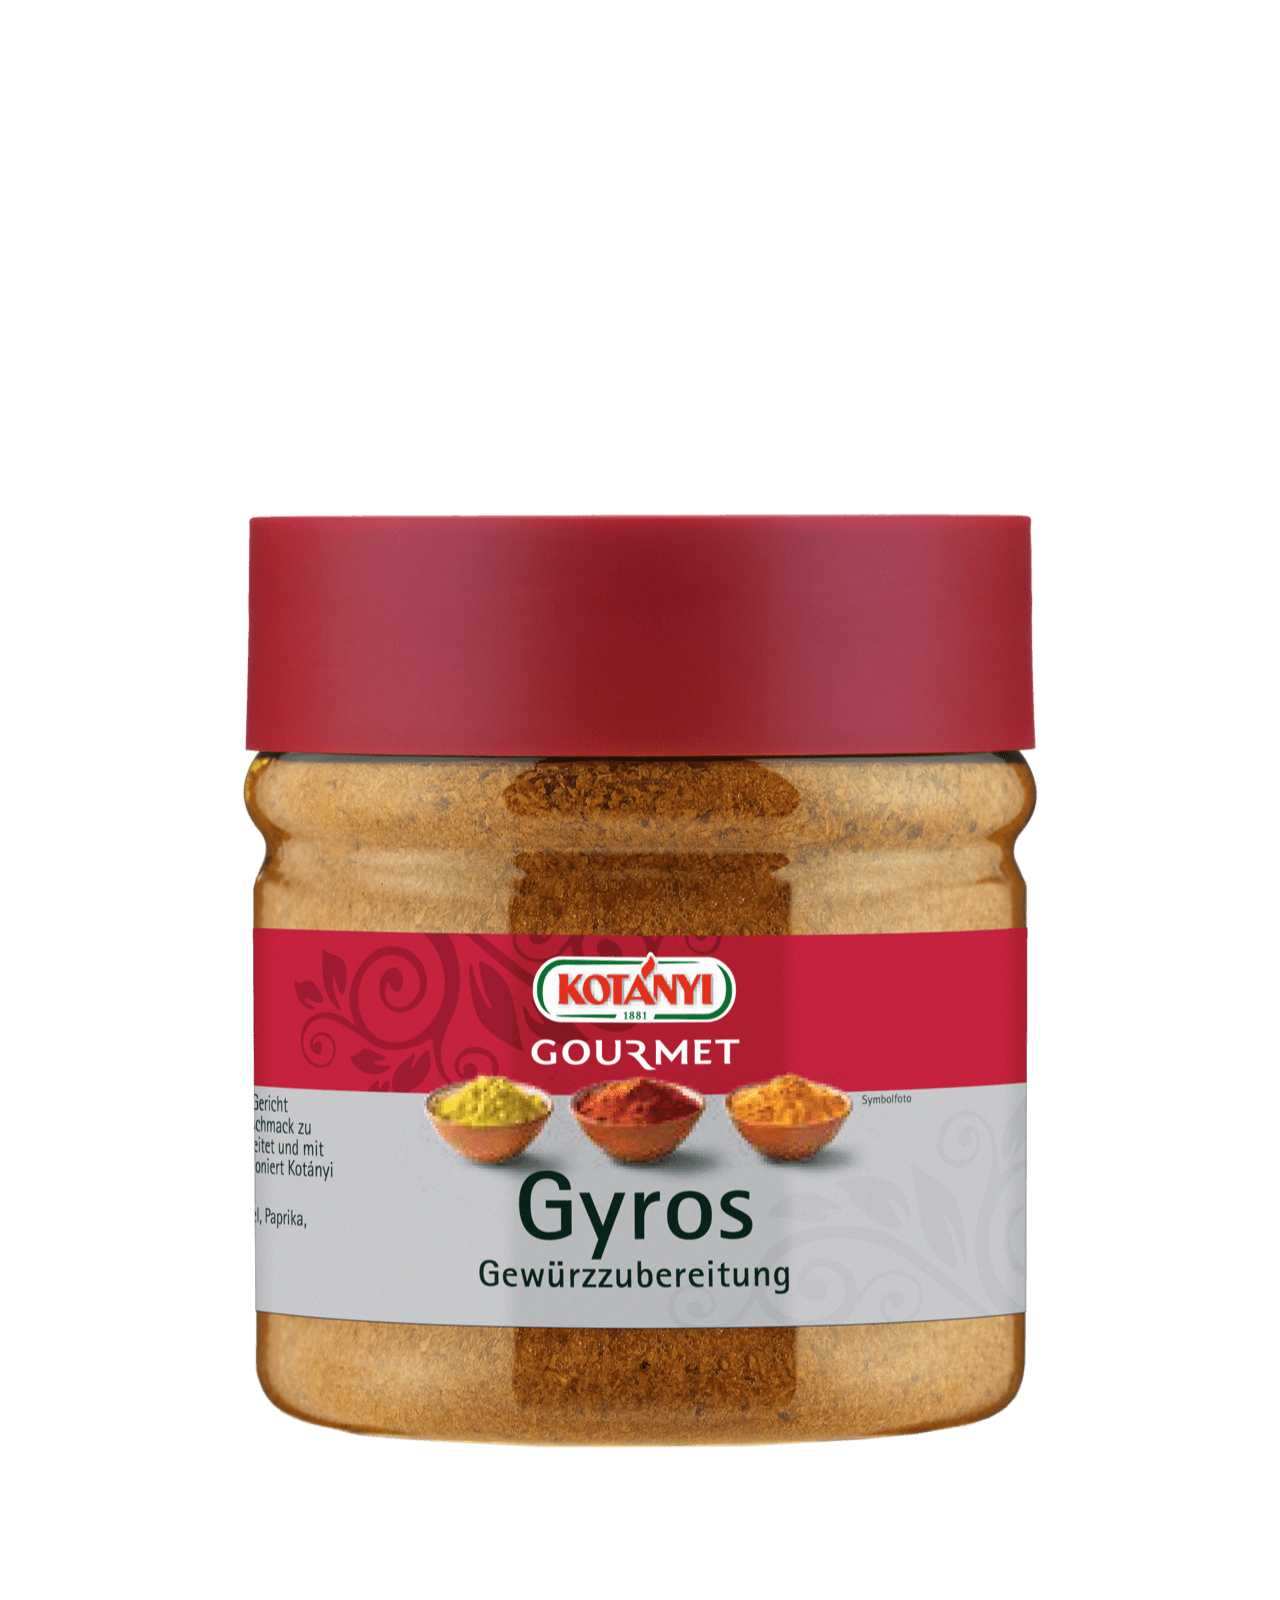 Kotányi Gourmet Gyros Gewürzzubereitung in der 400ccm Dose